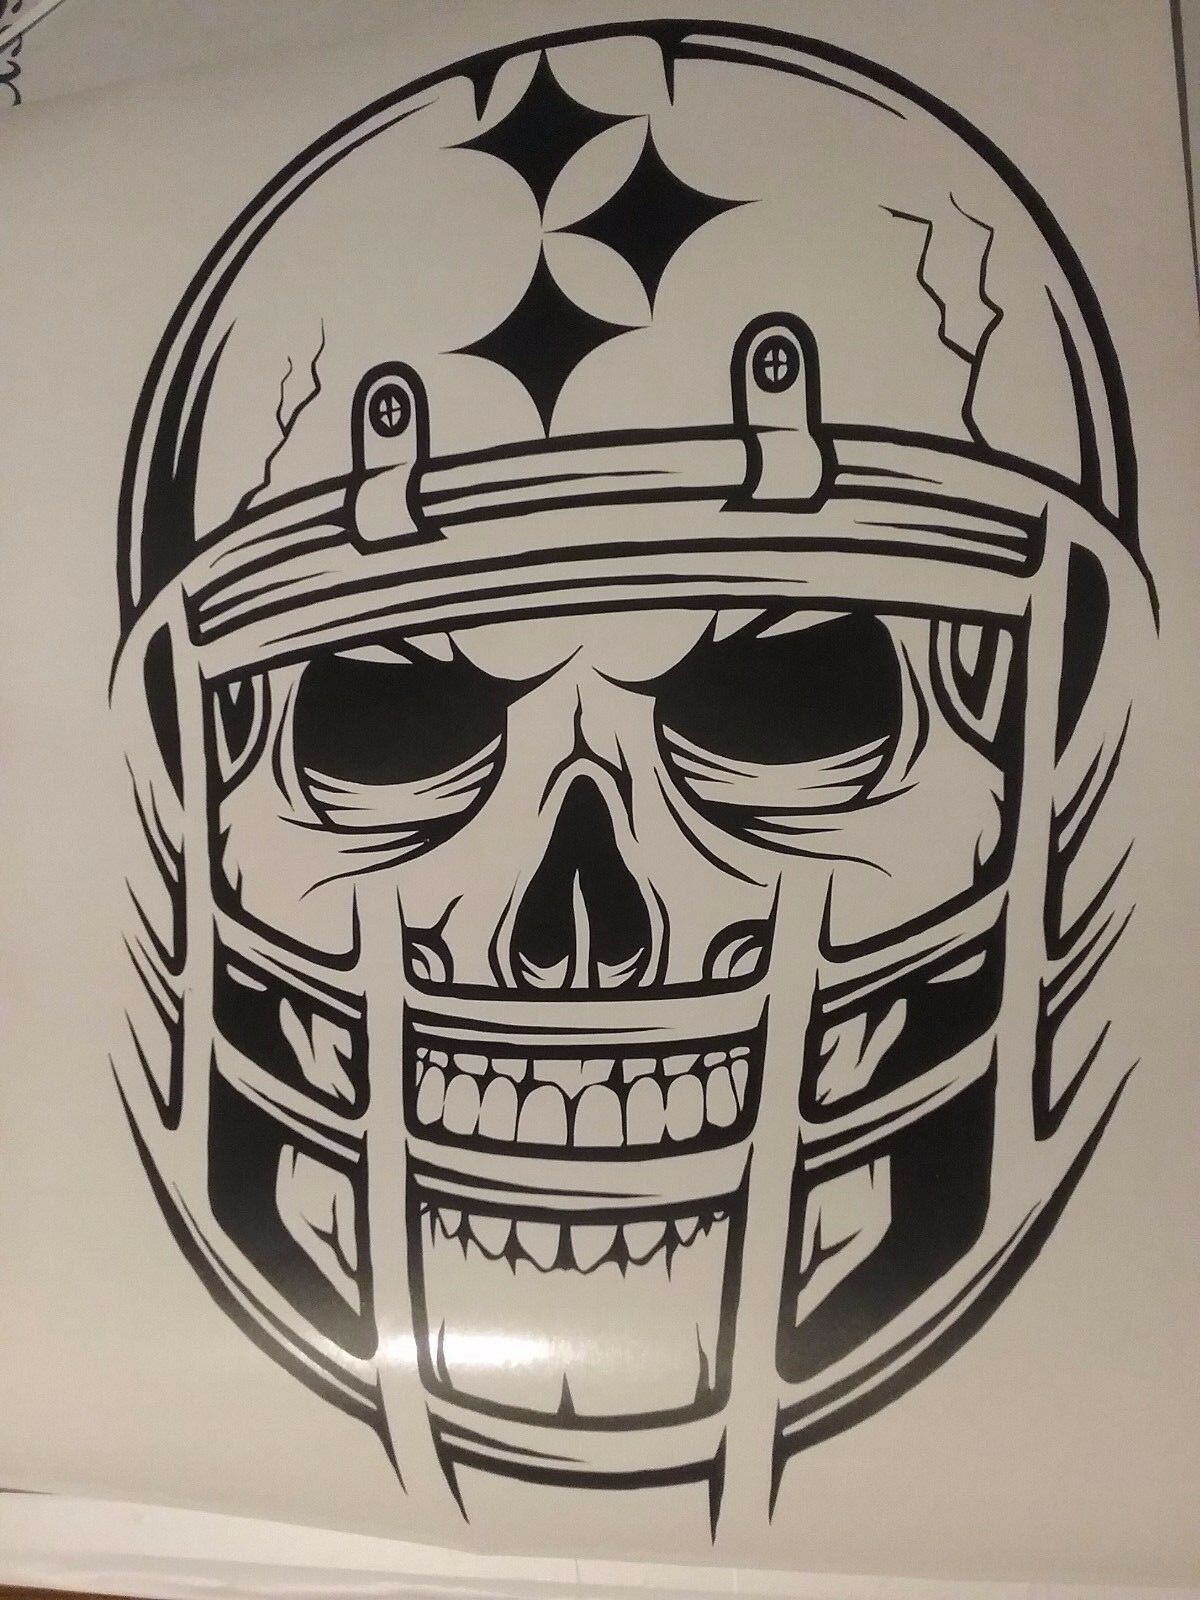 Pittsburgh Steelers Skull Football Helmet Vinyl Decal Window Sticker Car Accessories Home Vehicle Decor